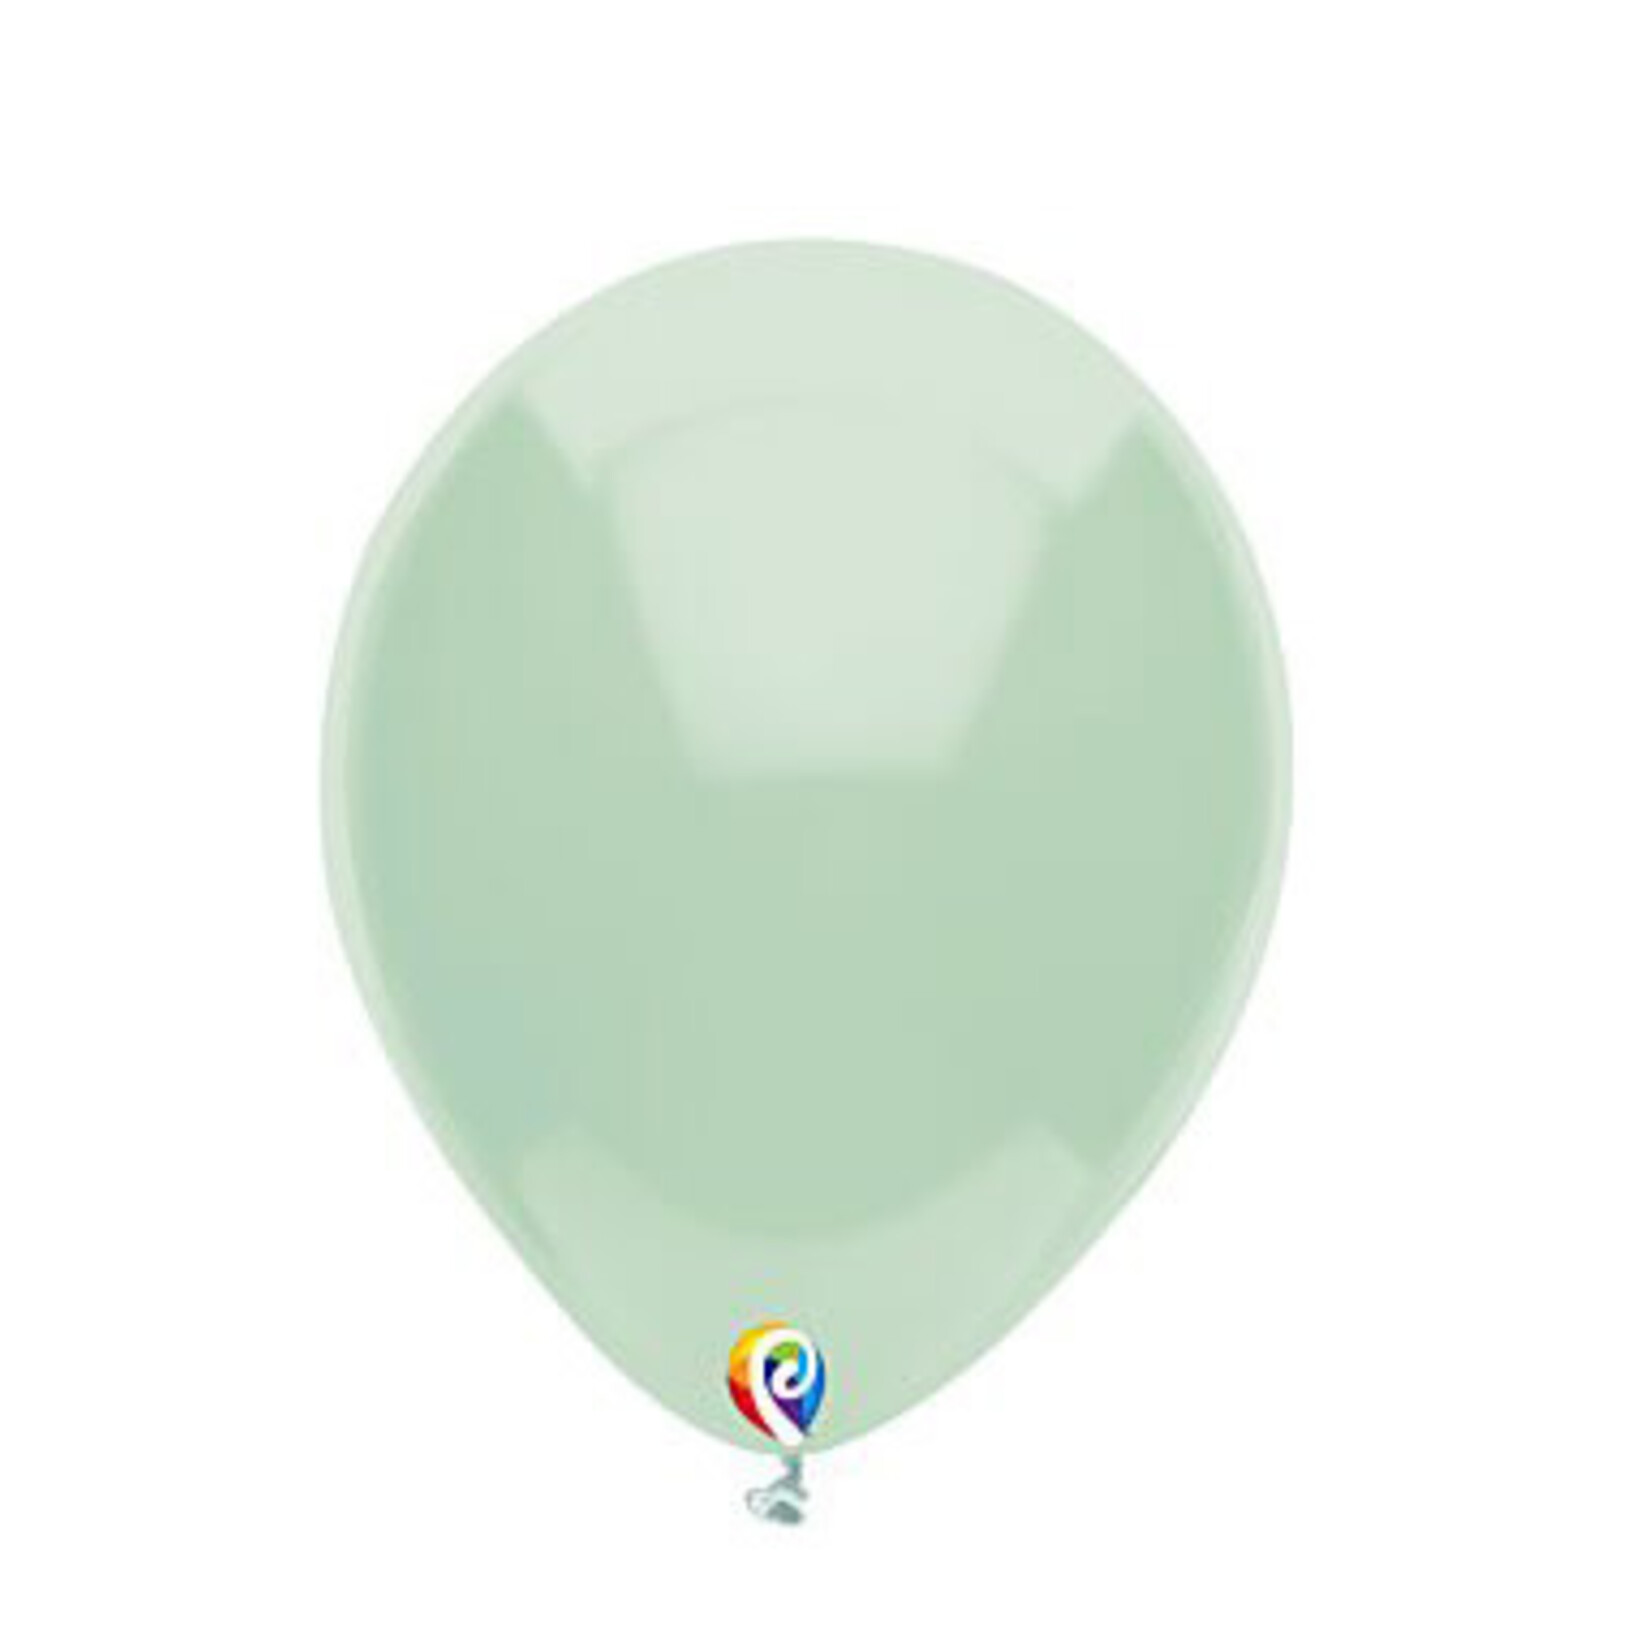 Funsational 12" Mint Green Latex Balloons - 15ct.